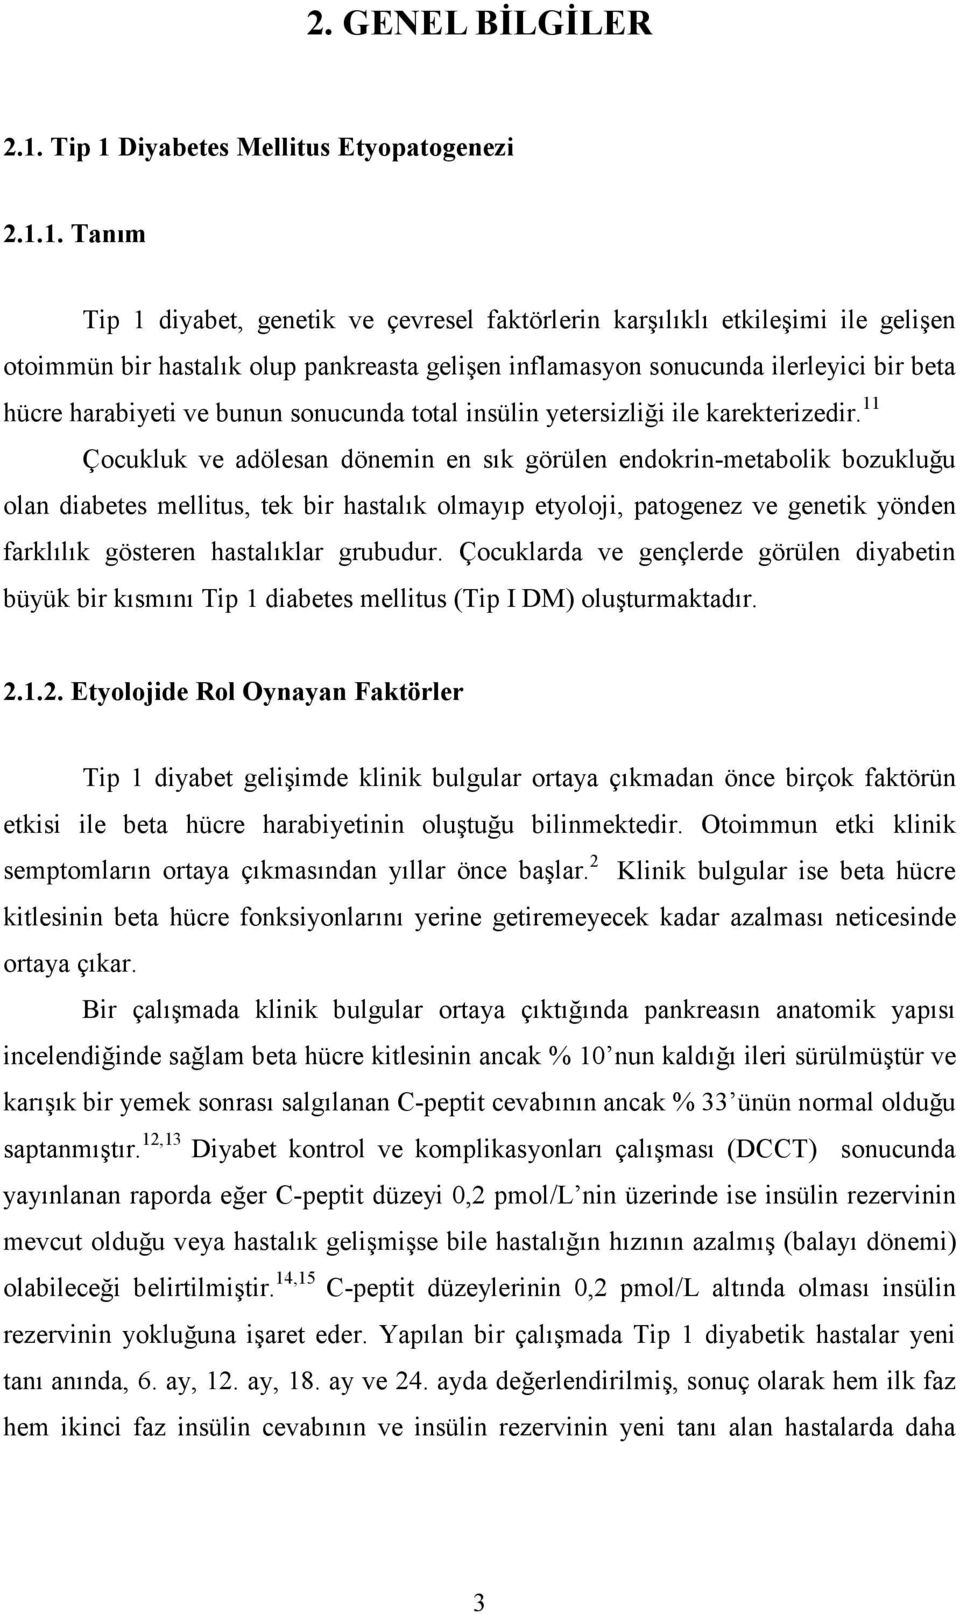 Diyabetes Mellitus Etyopatogenezi 2.1.